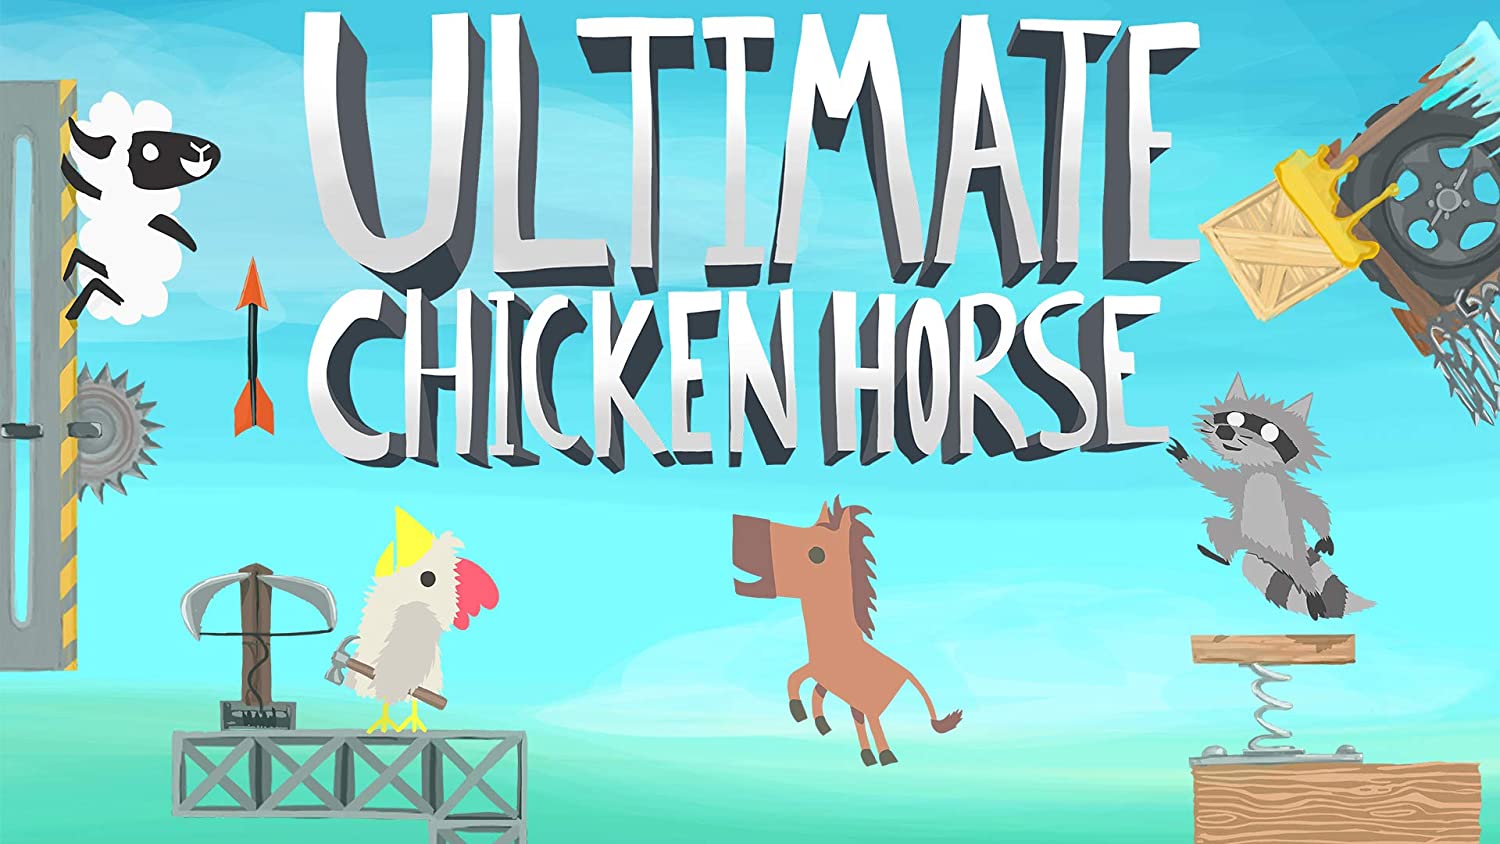 ultimate chicken horse kickstarter